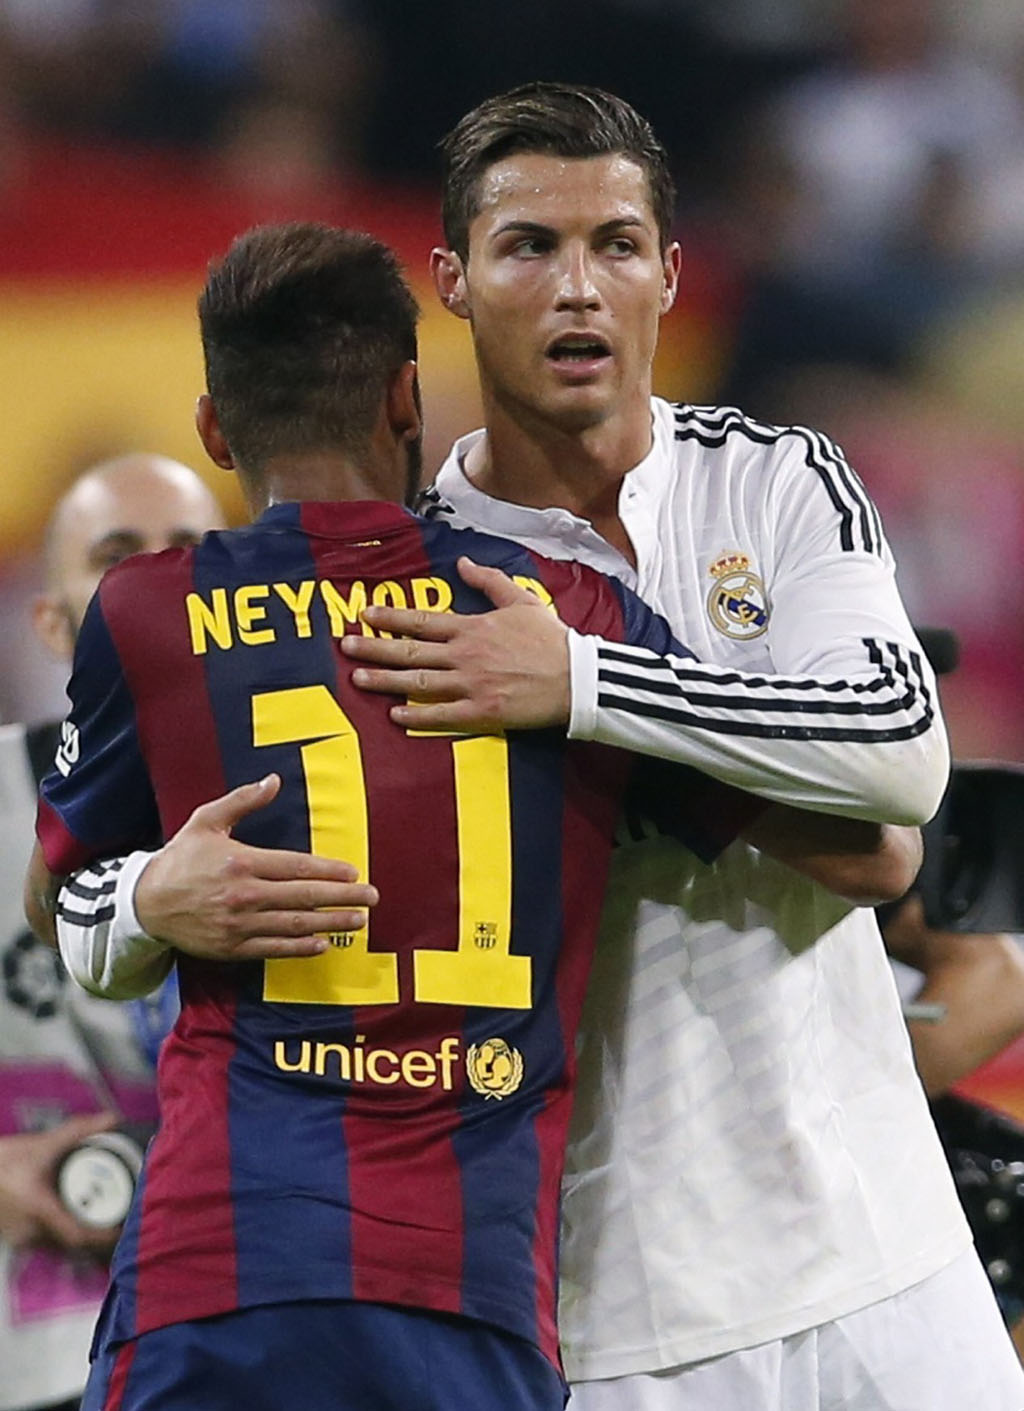 Neymar hugging Cristiano Ronaldo before a Real Madrid vs Barcelona game